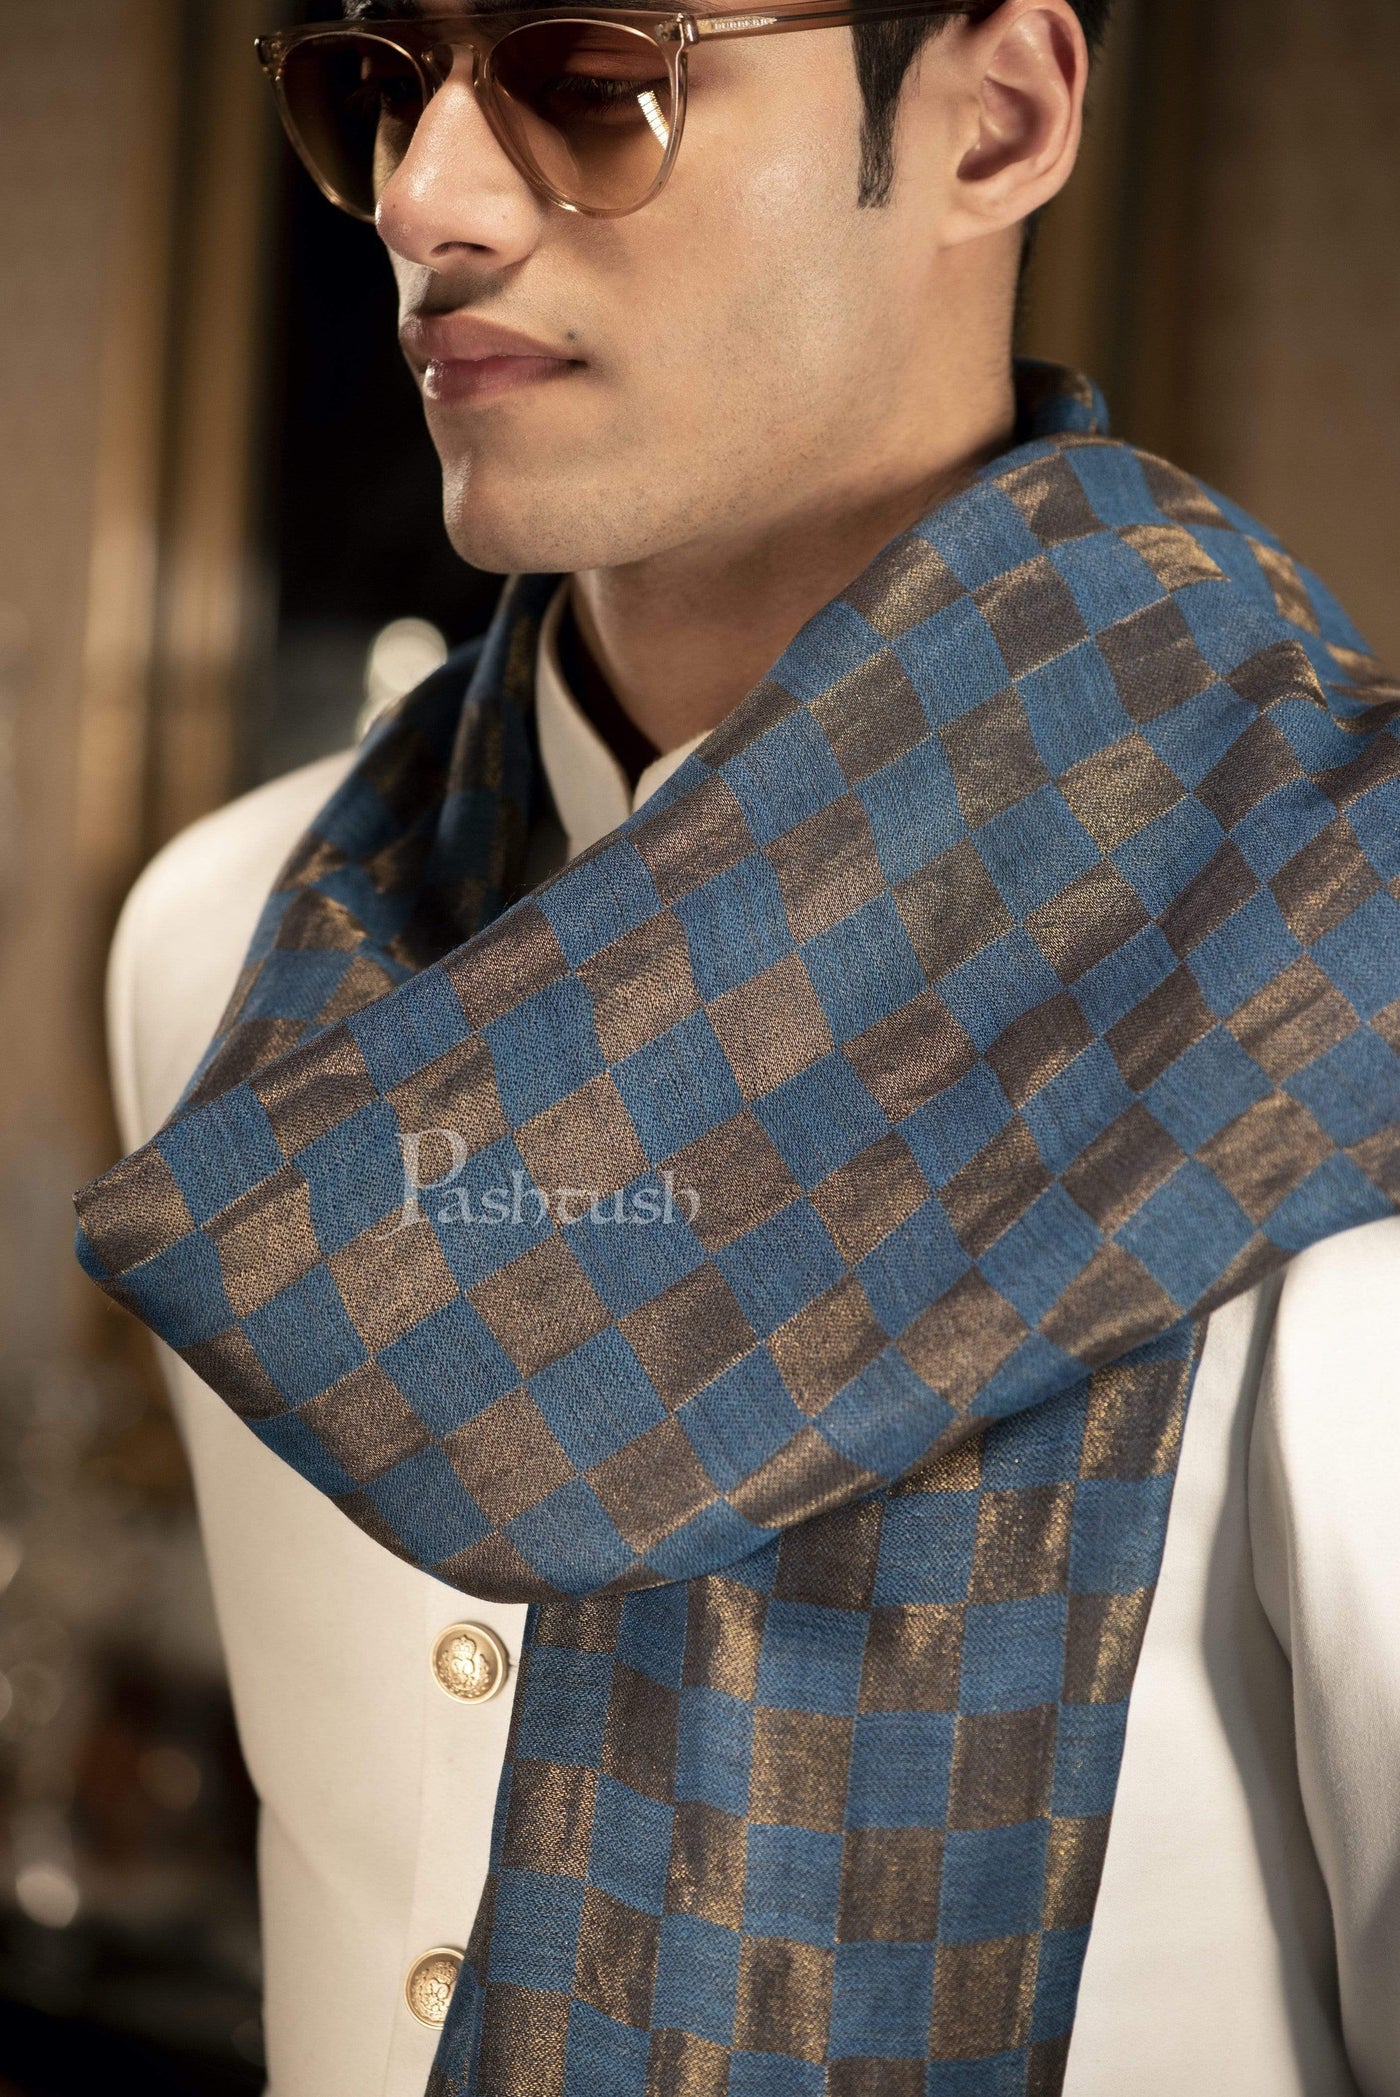 Pashtush Mens Checkered Scarf, With Metallic Thread Weave, Black